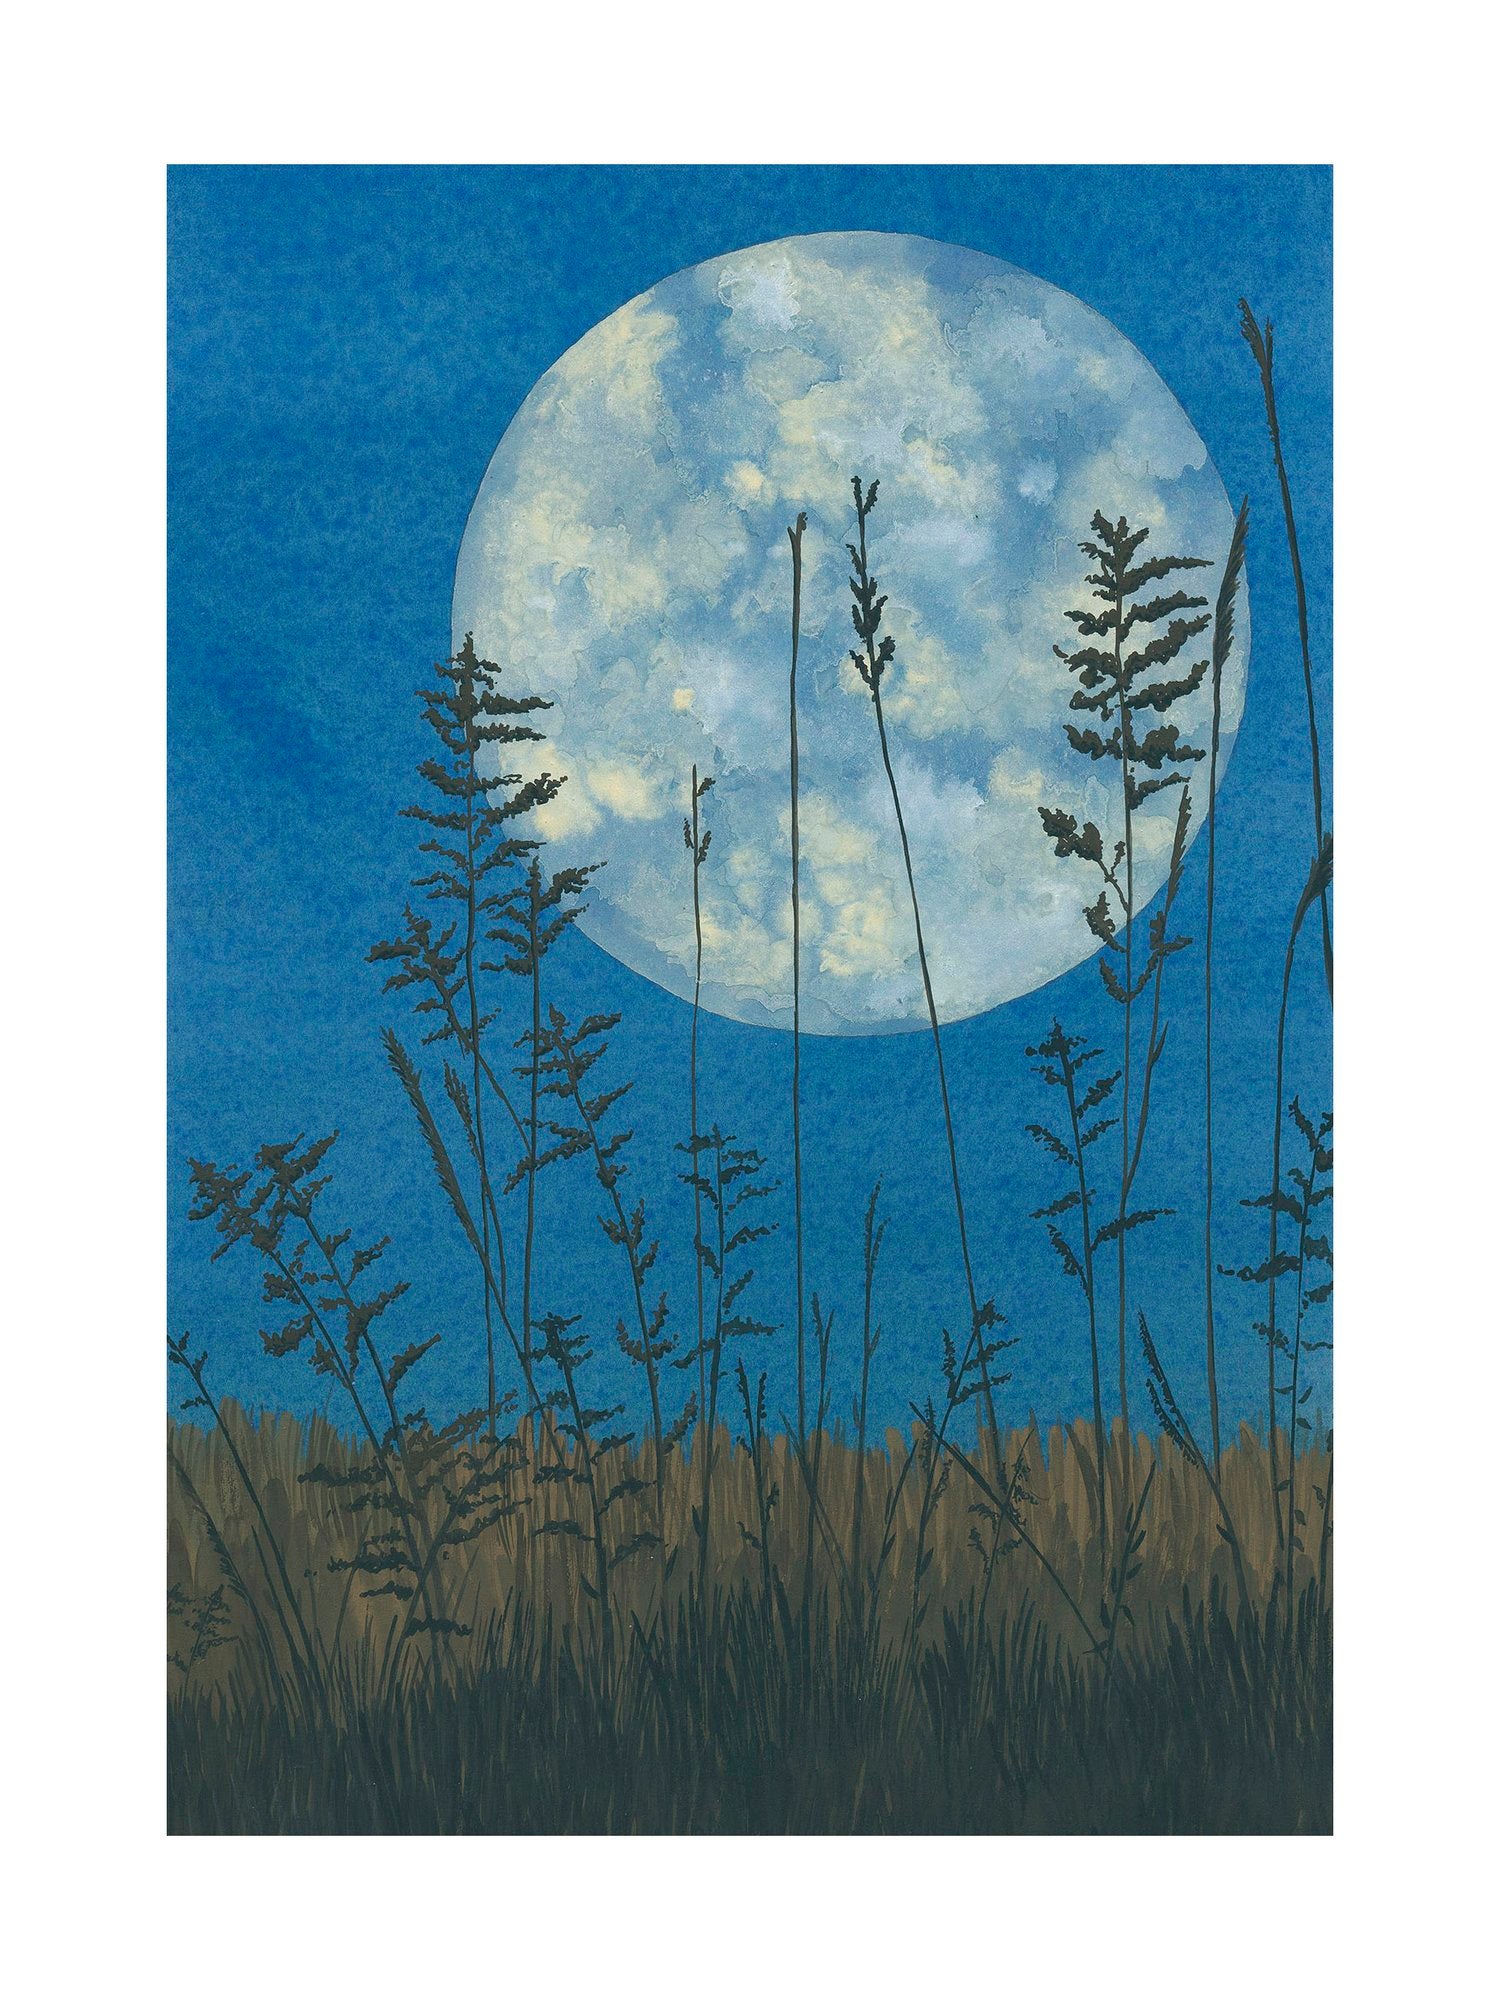 ART PRINT: Harvest Moon - by Heather Sundquist Hall